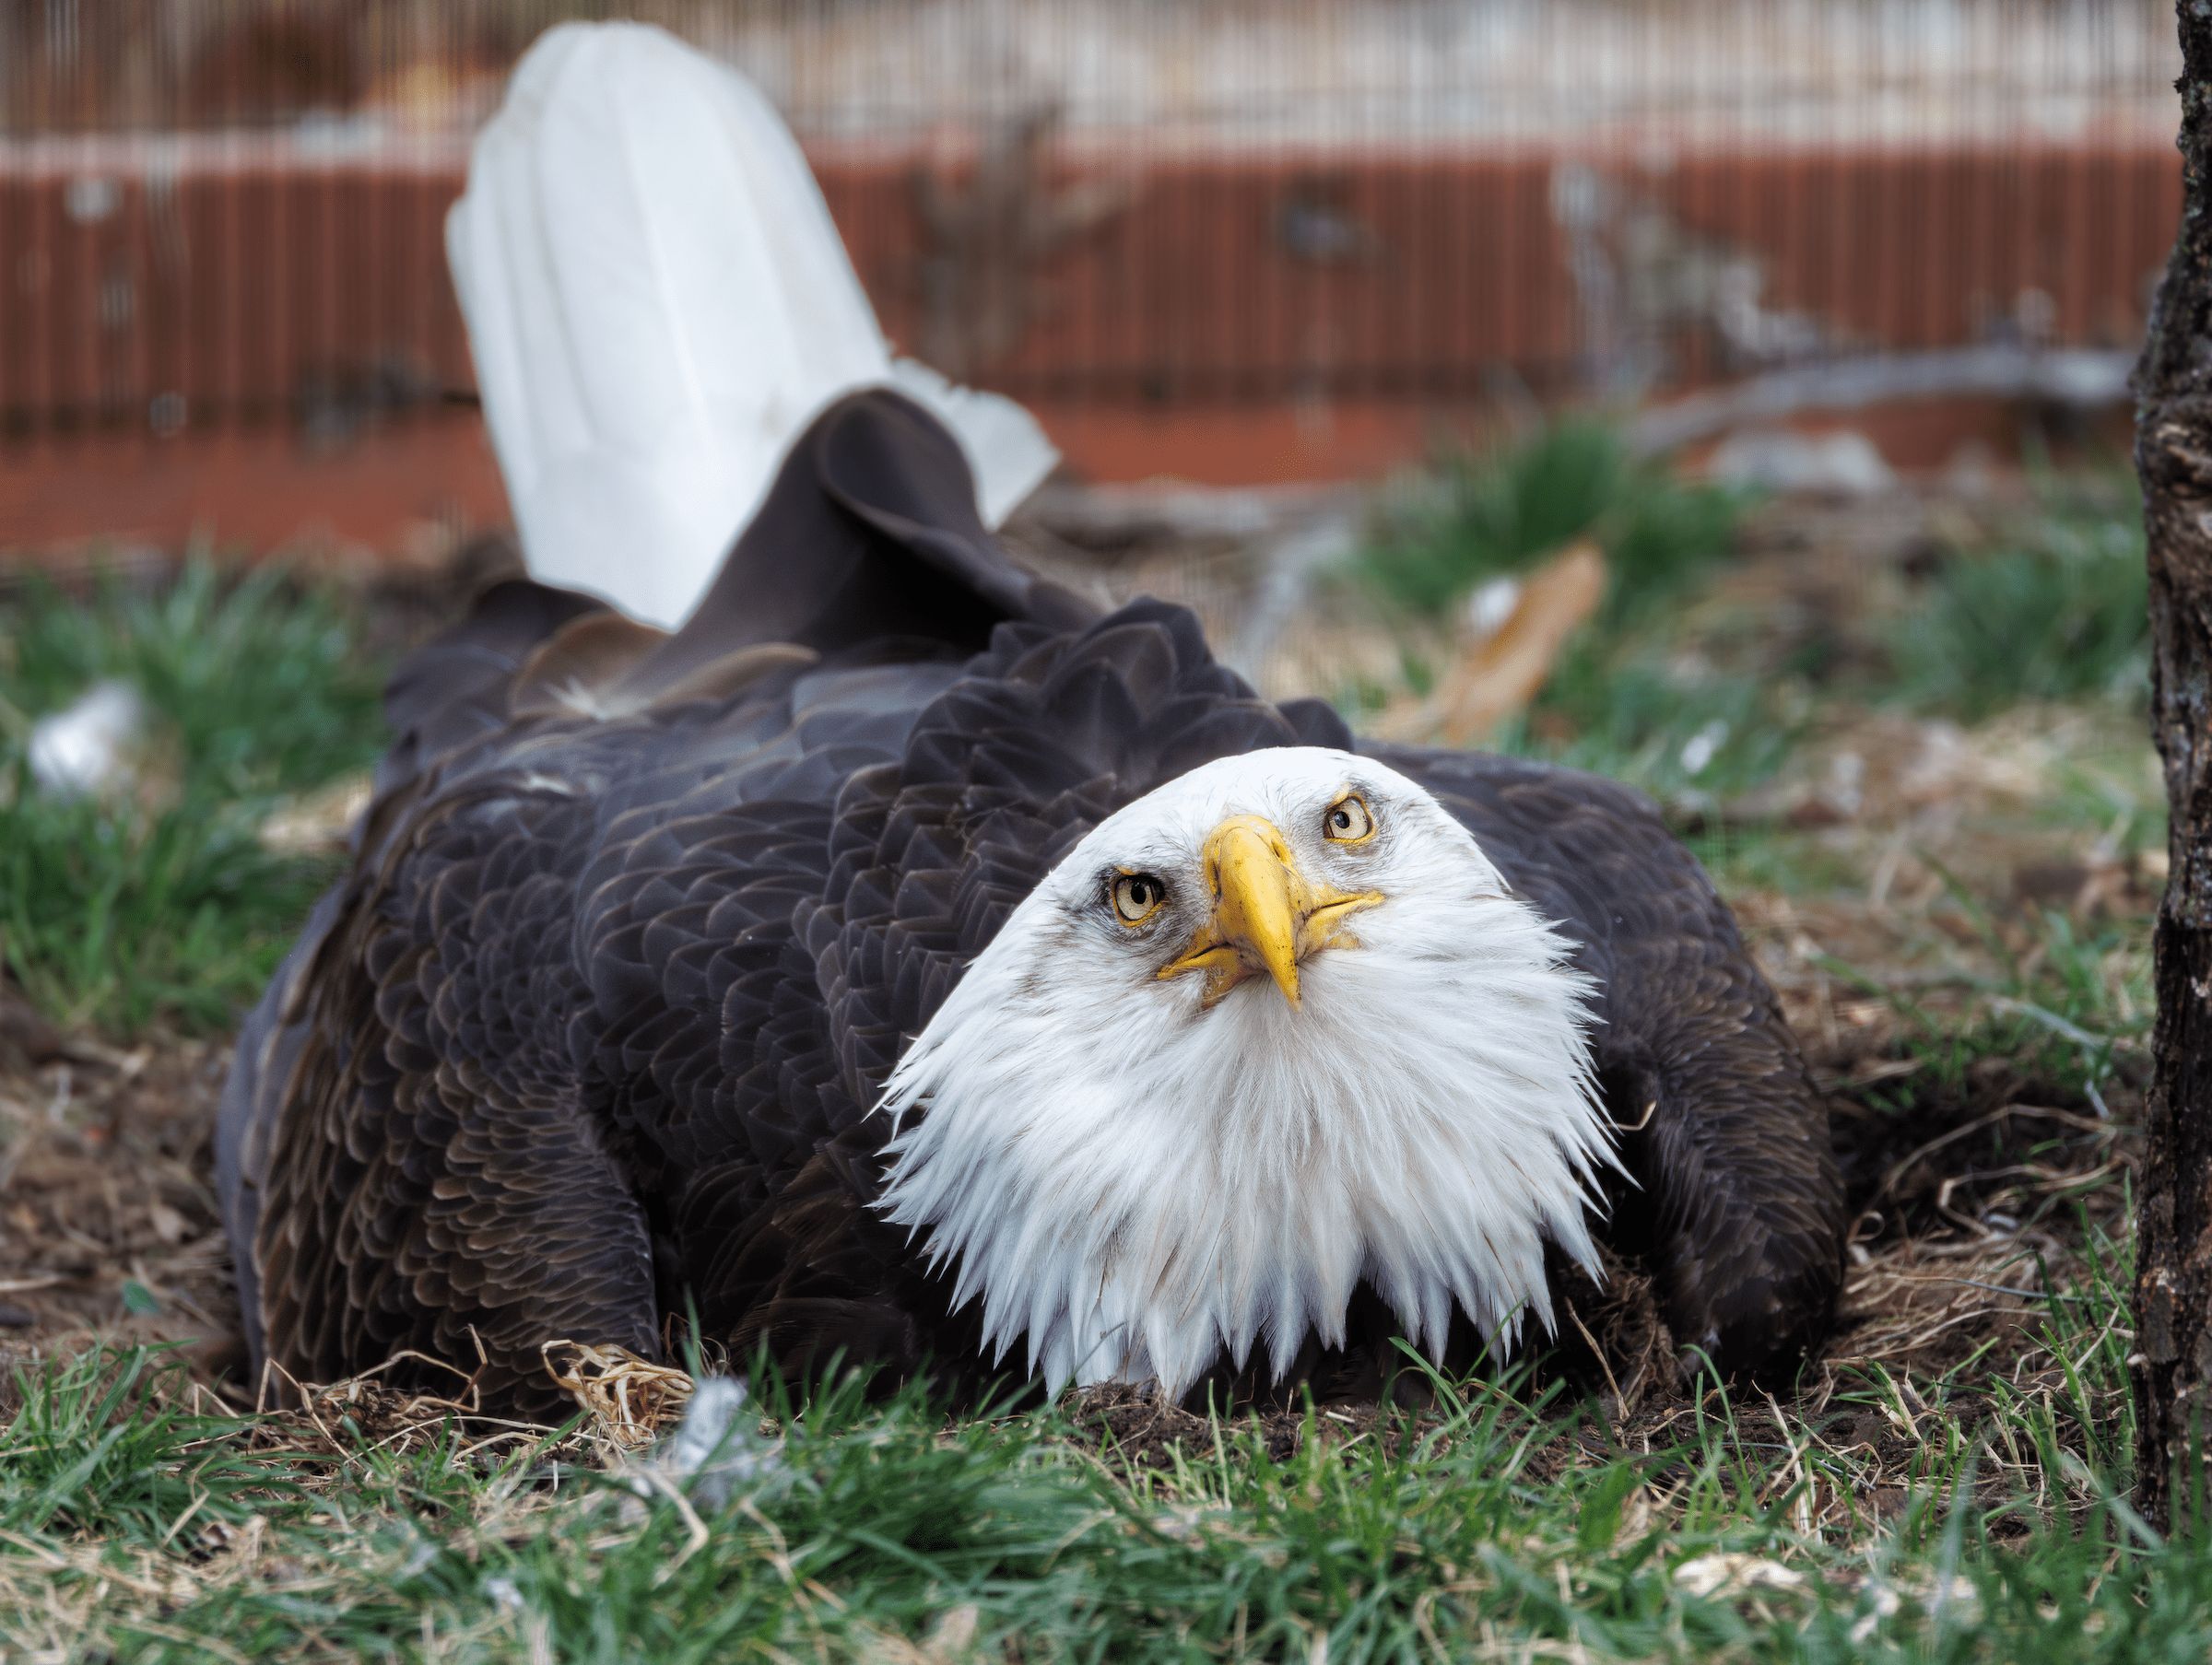 Murphy the bald eagle on his rock. (Courtesy of Stu Goz/World Bird Sanctuary)